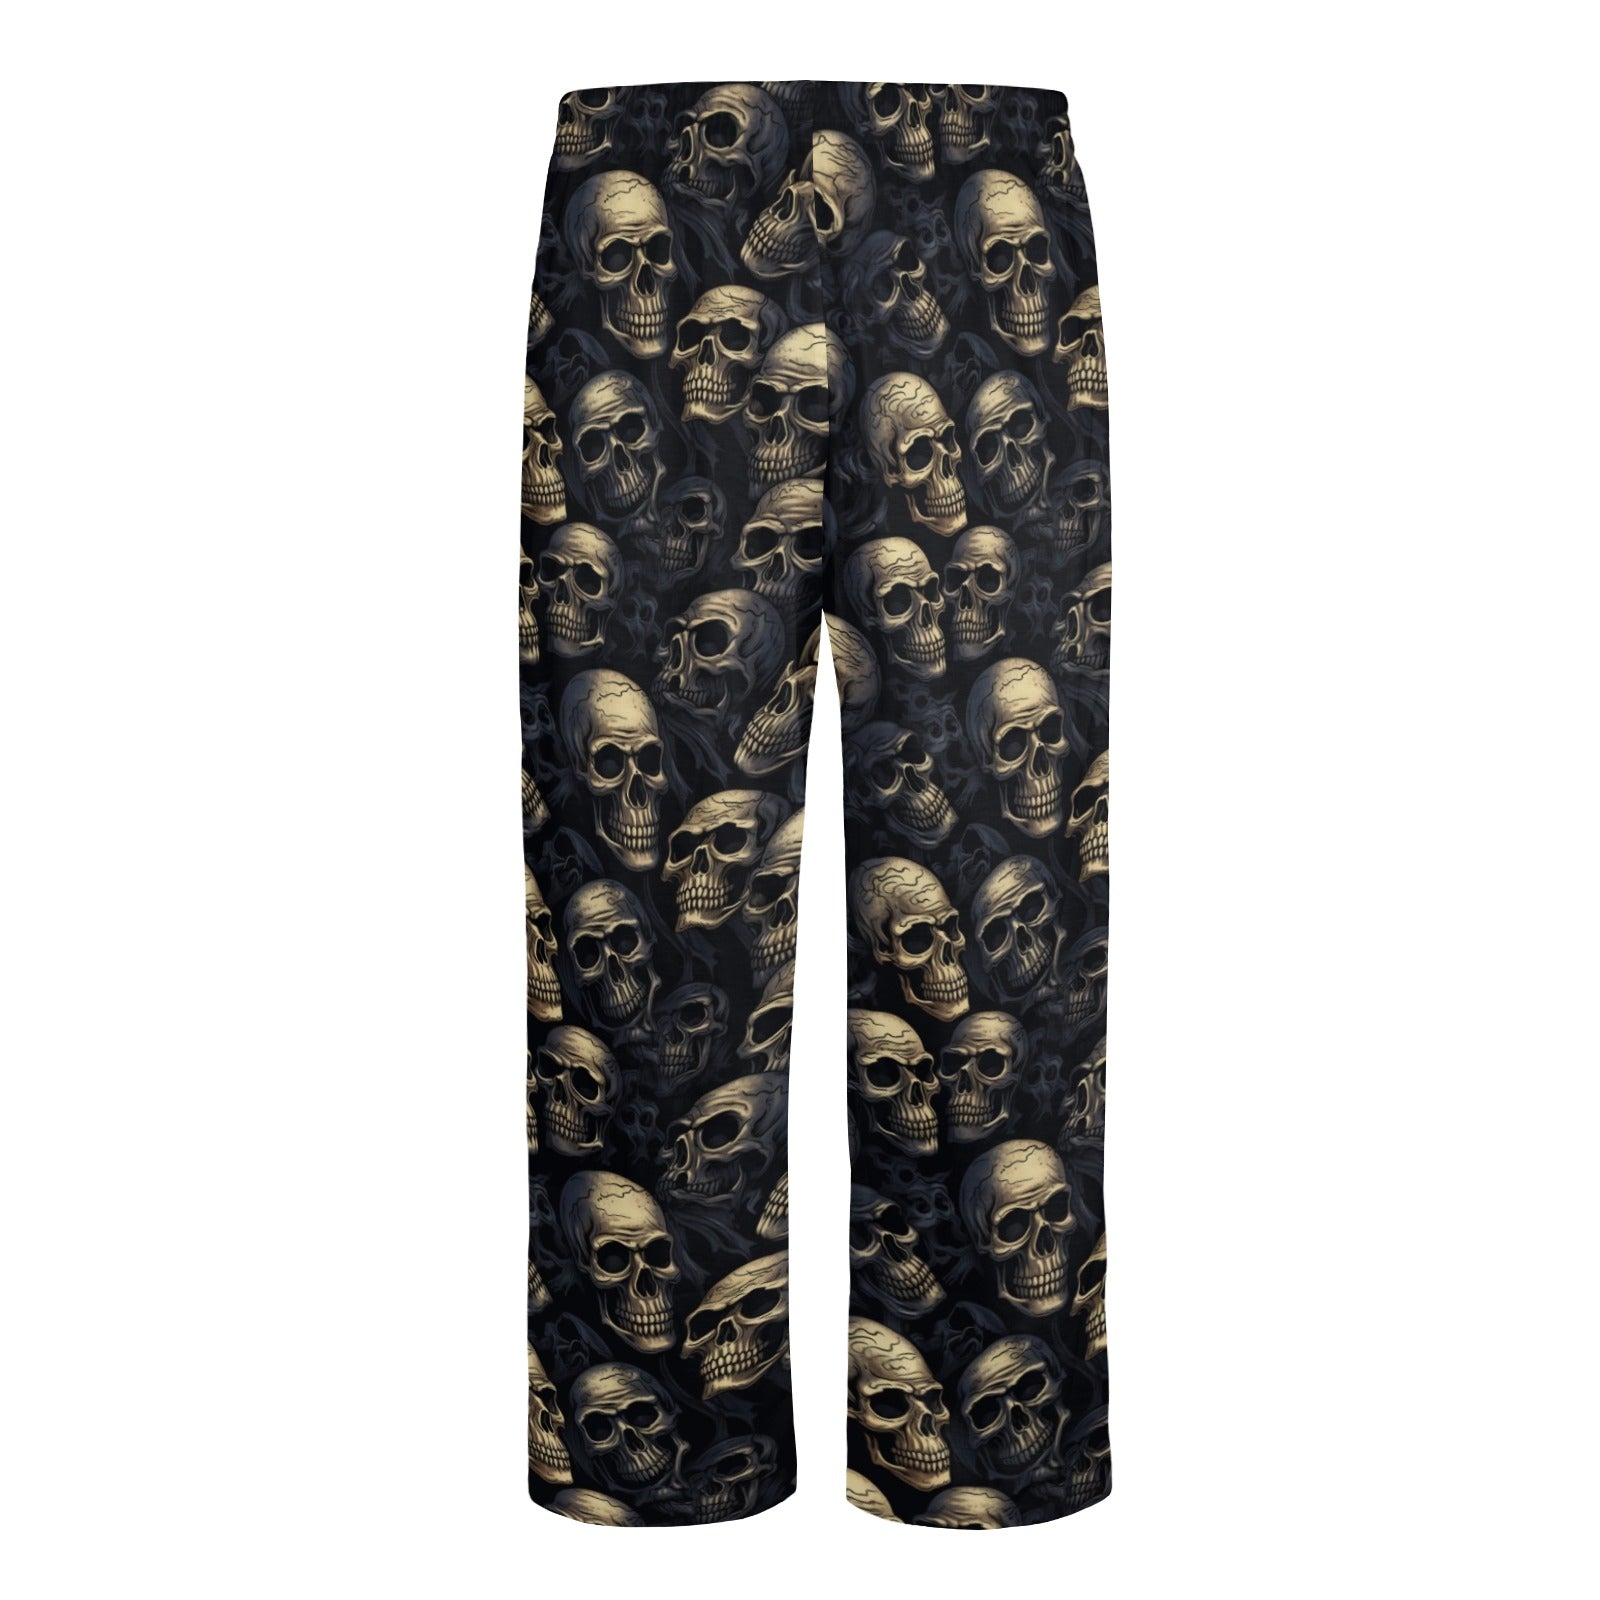 Skull Halloween Men Pajamas Pants, Black Skeleton Spooky Horror Gothic Satin PJ Pockets Sleep Lounge Trousers Couples Matching Bottoms Starcove Fashion